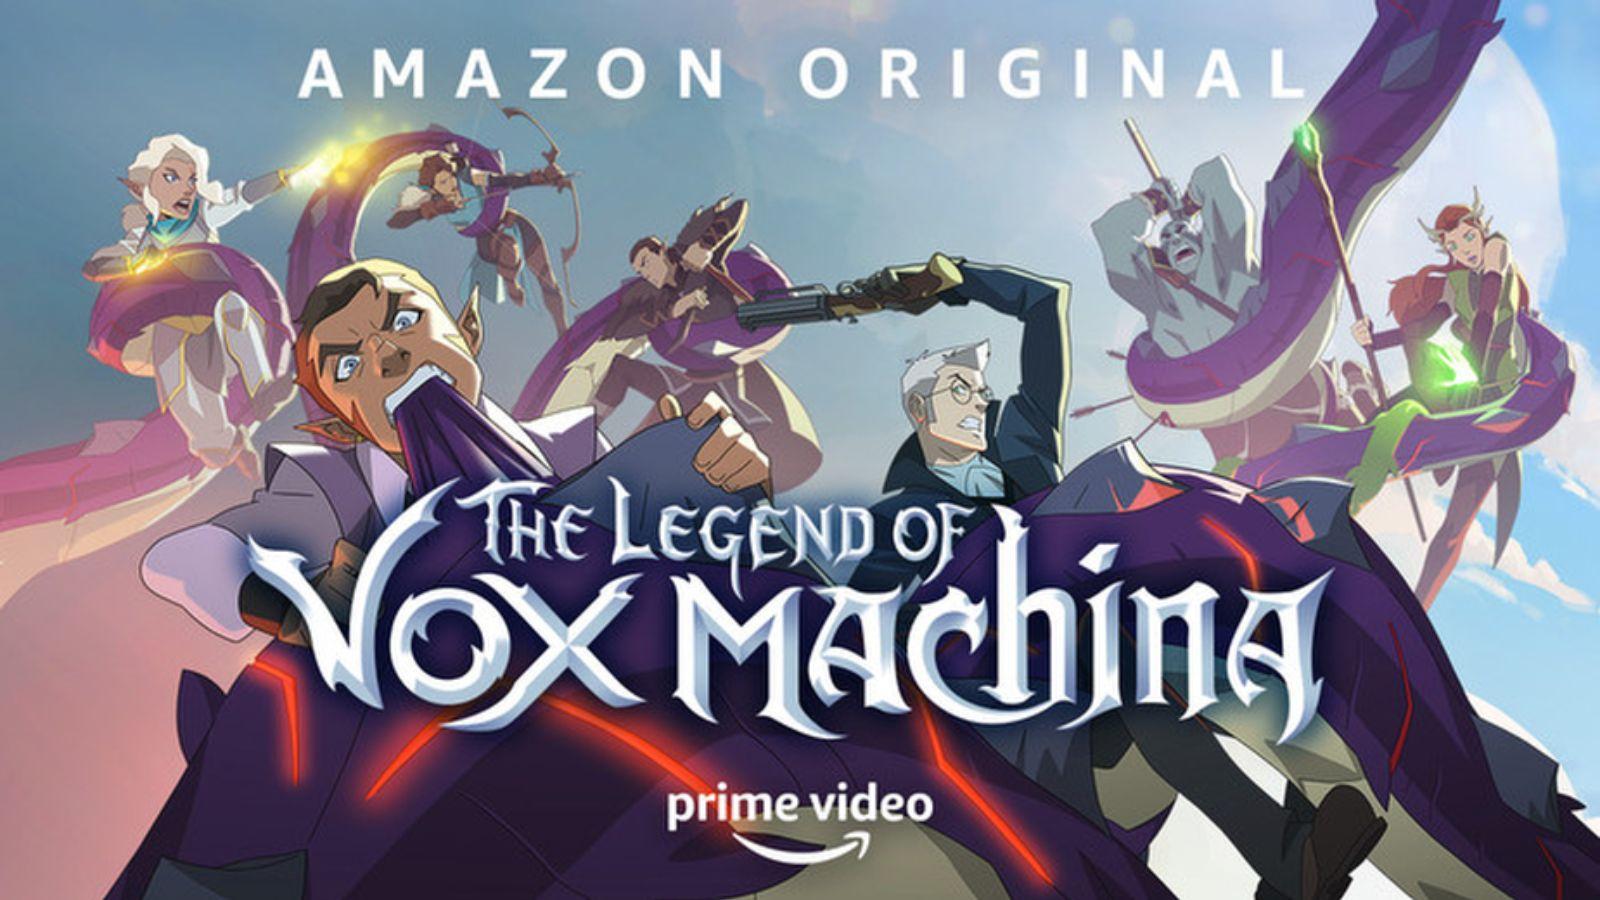 The Legend of Vox Machina